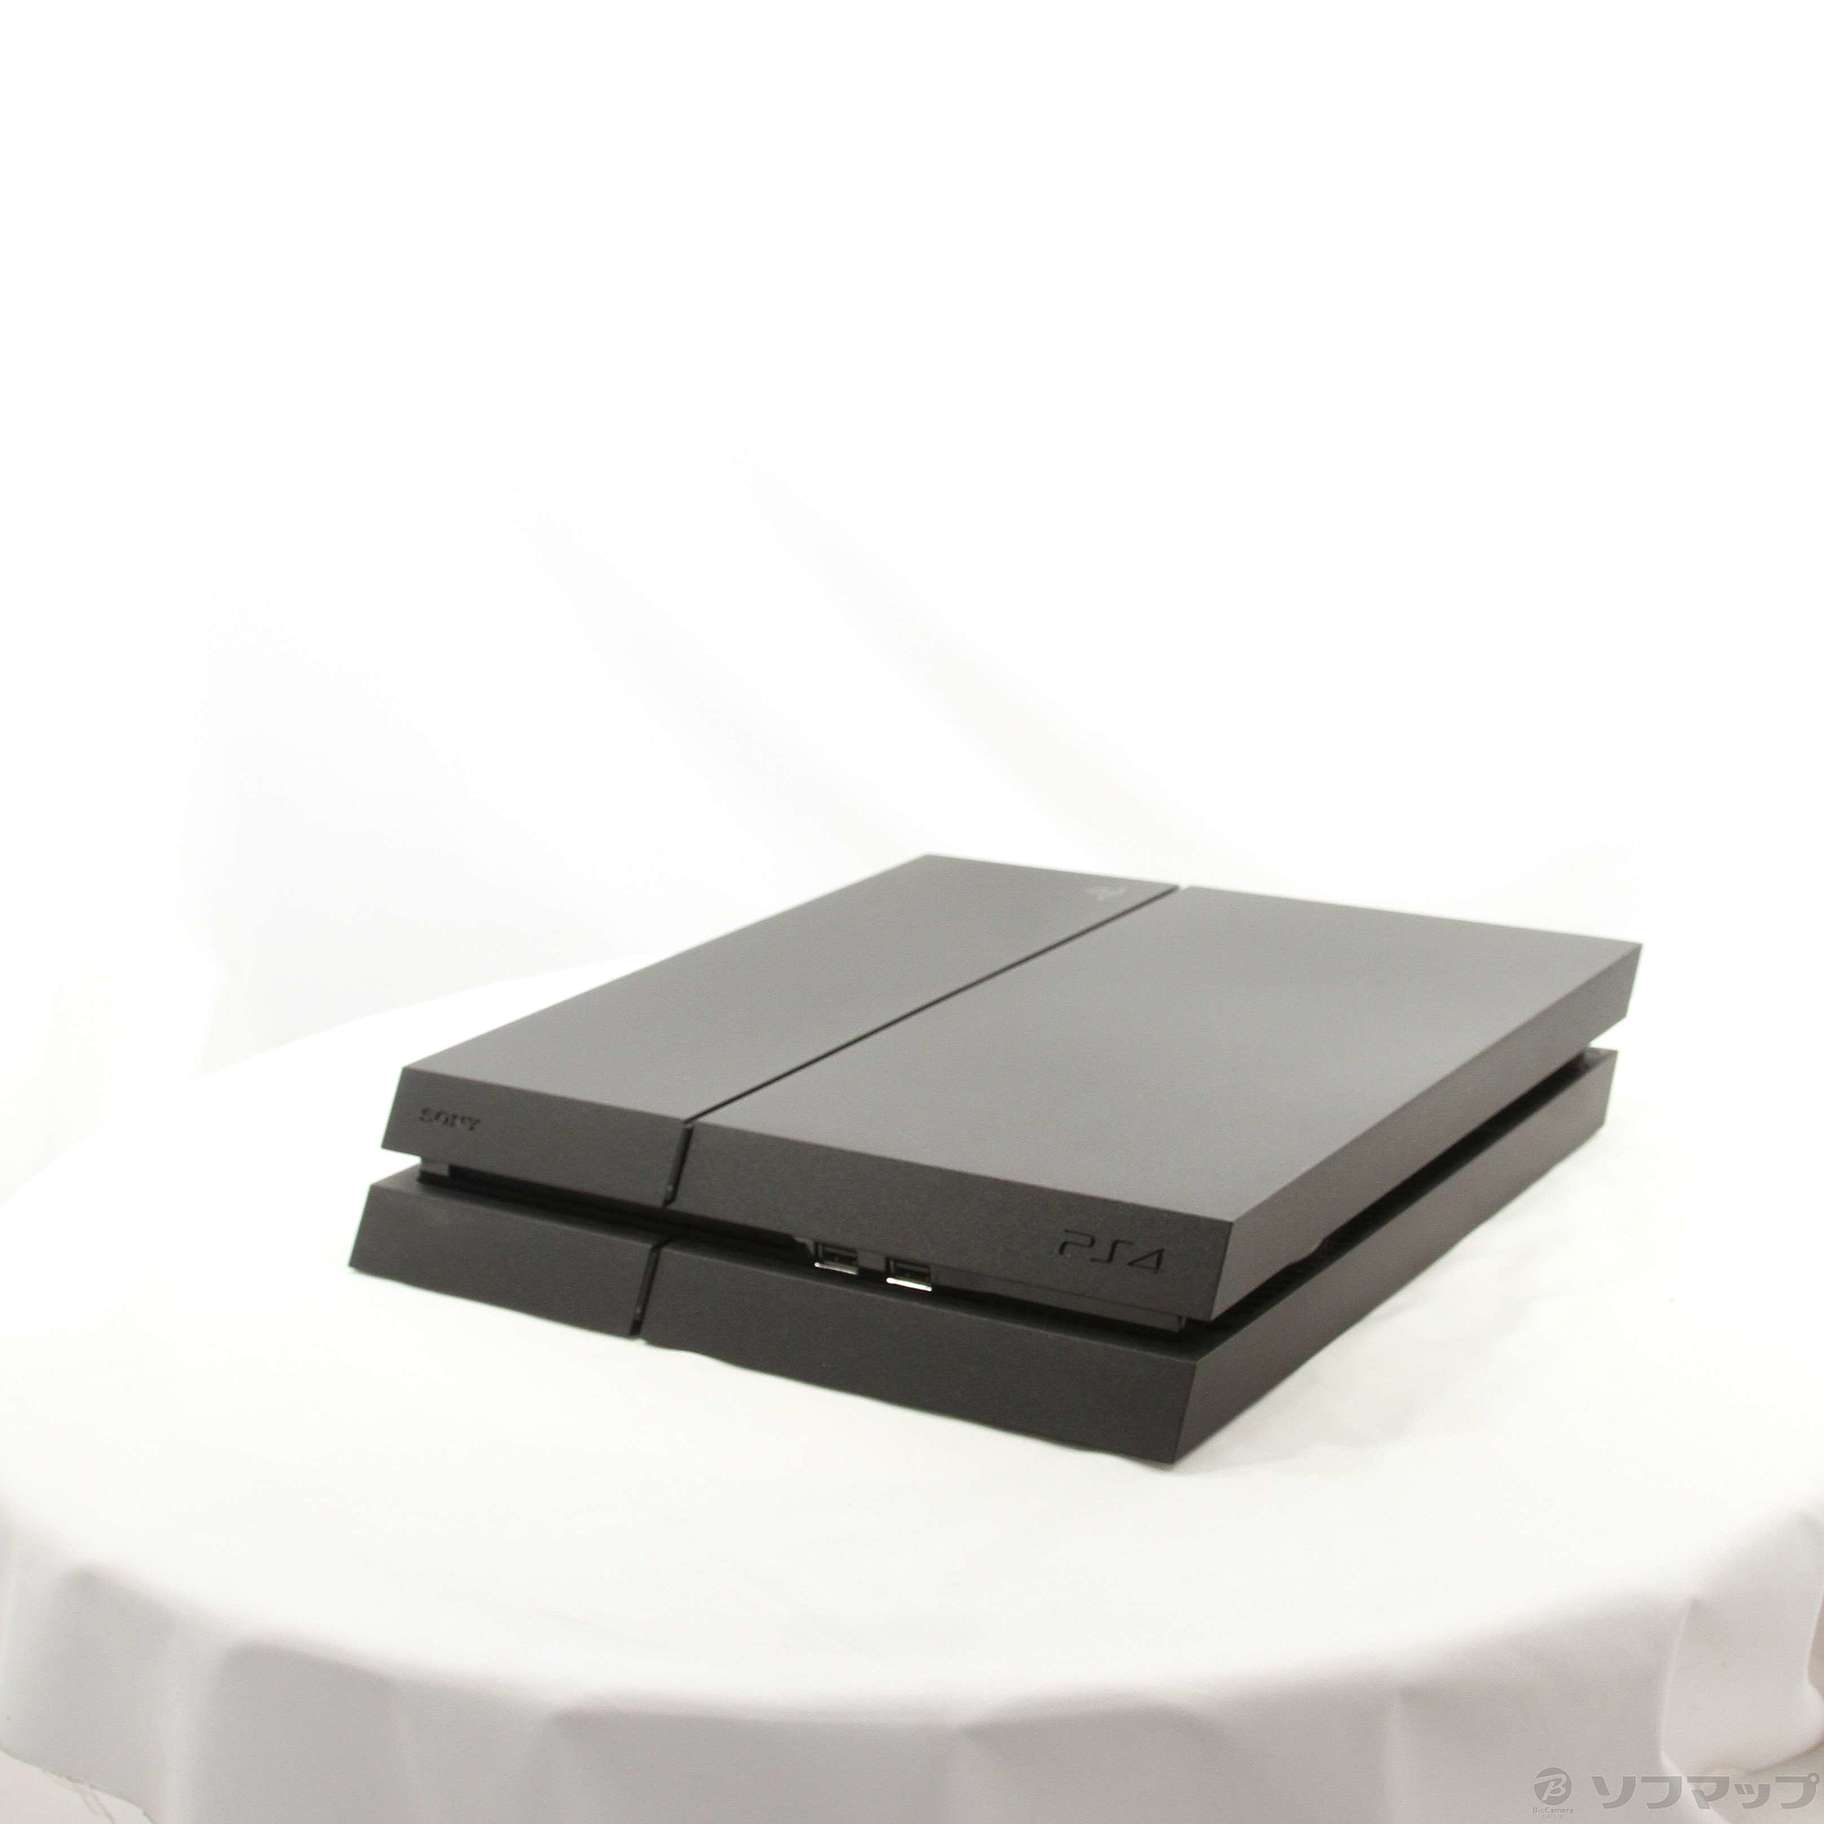 PlayStation 4 ジェットブラック CUH-1200AB